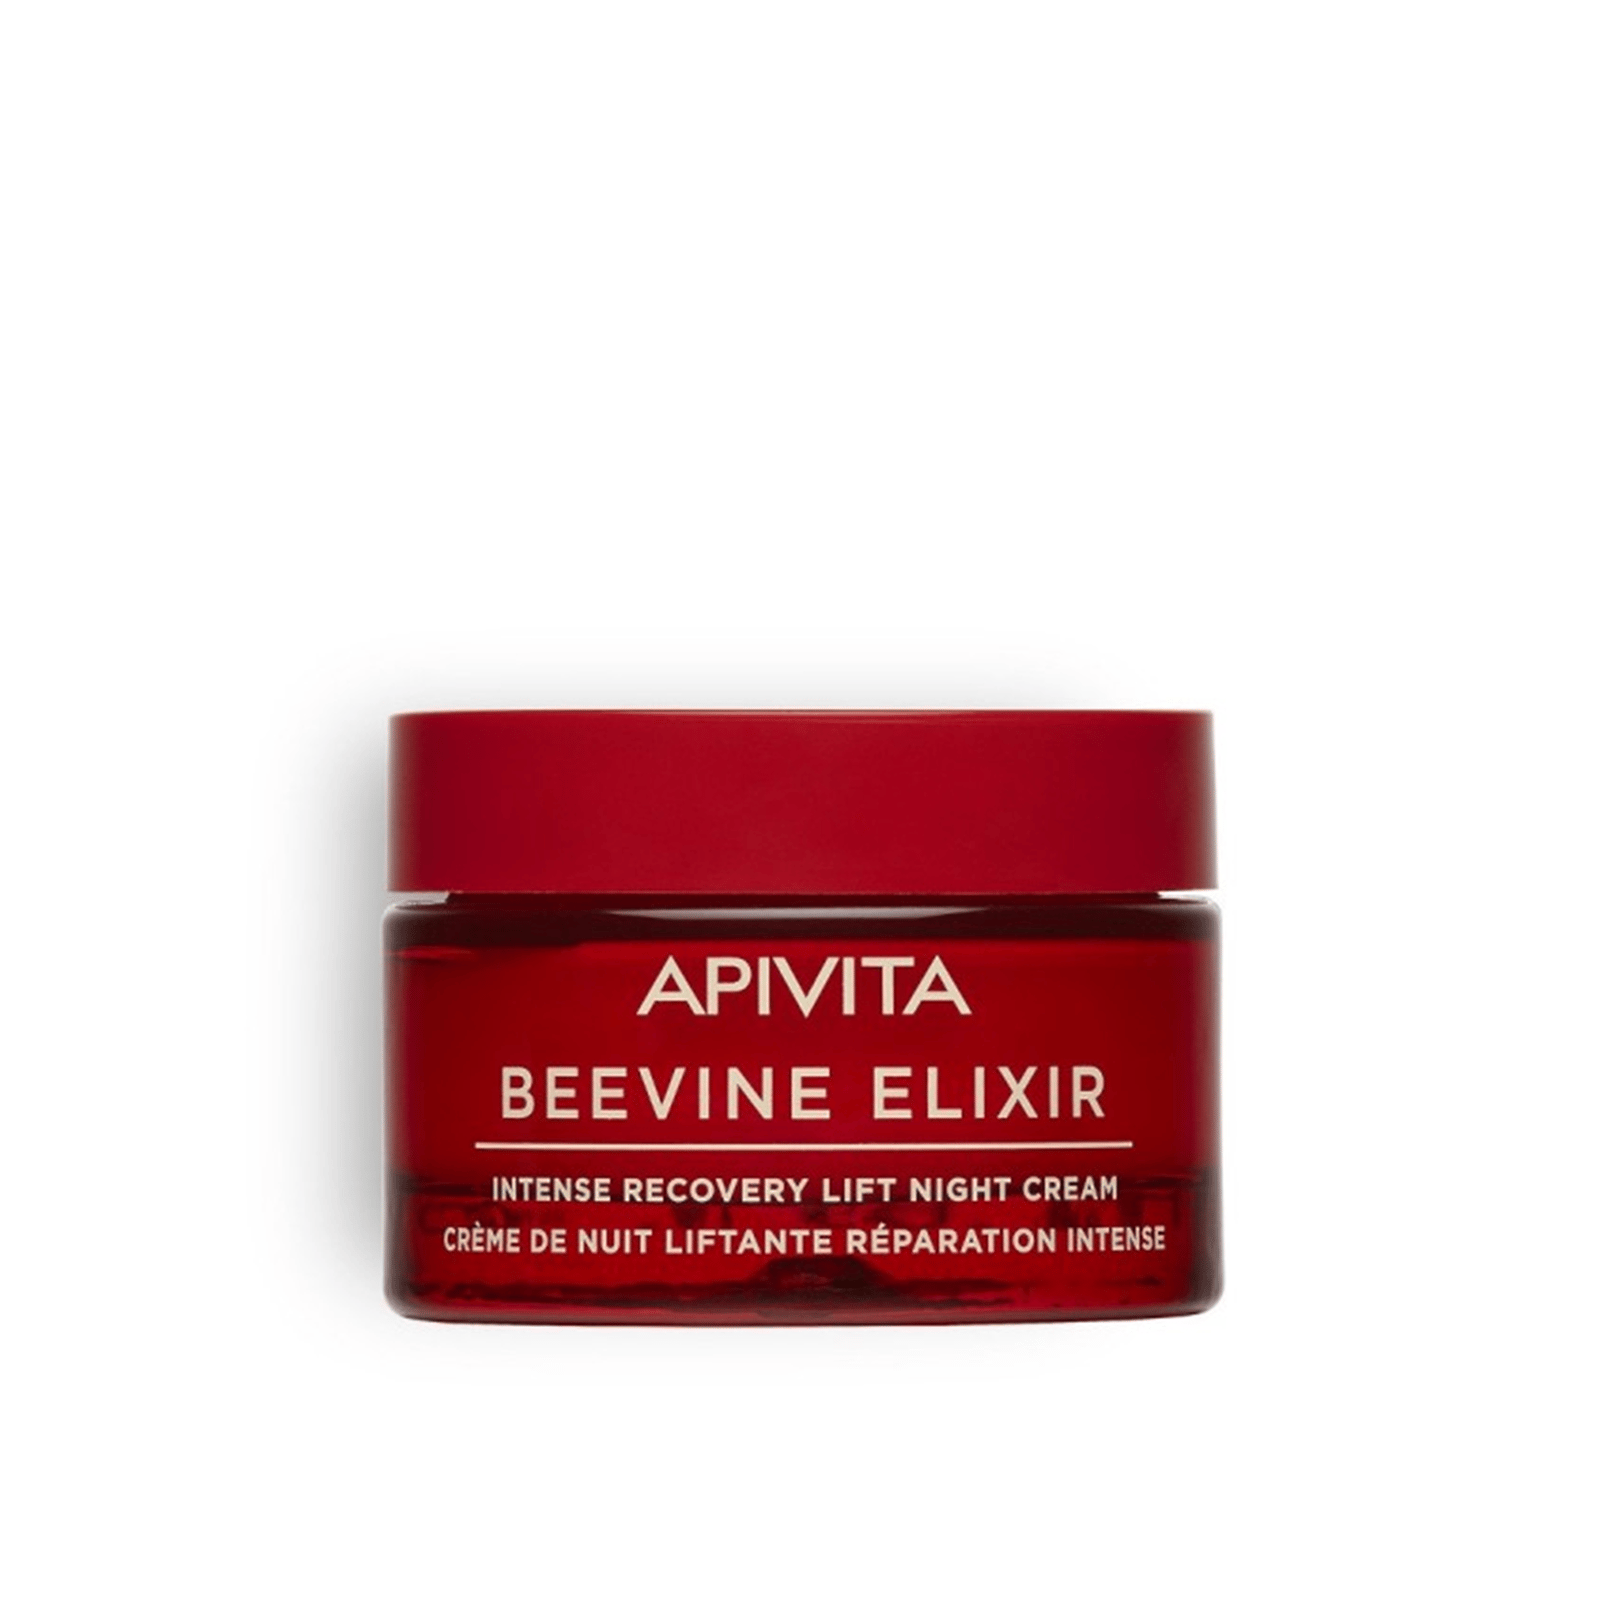 https://static.beautytocare.com/cdn-cgi/image/width=1600,height=1600,f=auto/media/catalog/product//a/p/apivita-beevine-elixir-intense-recovery-lift-night-cream-50ml.png